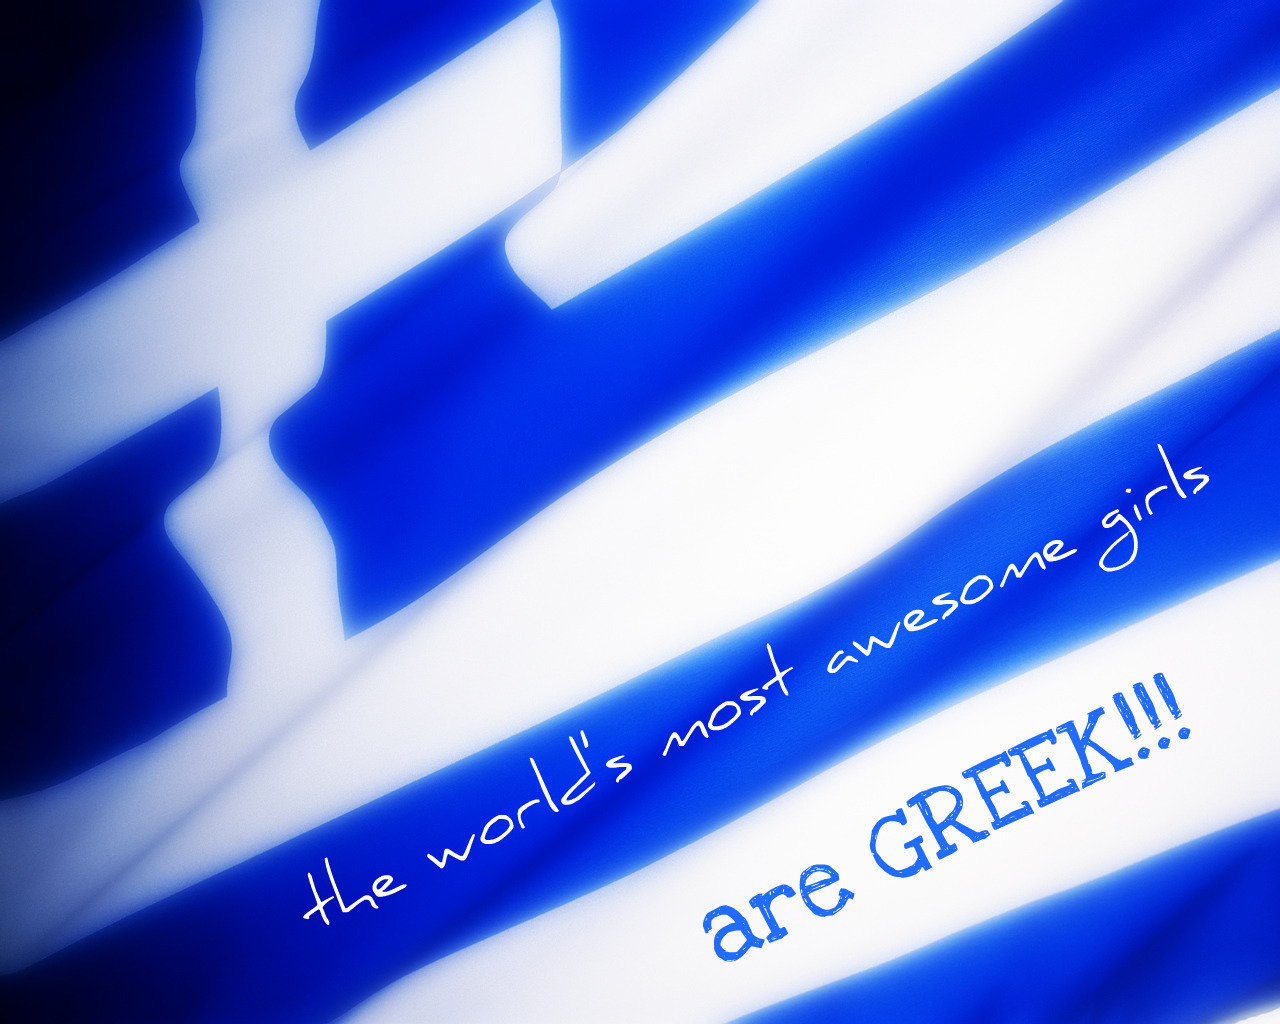 GREEK GIRLS!